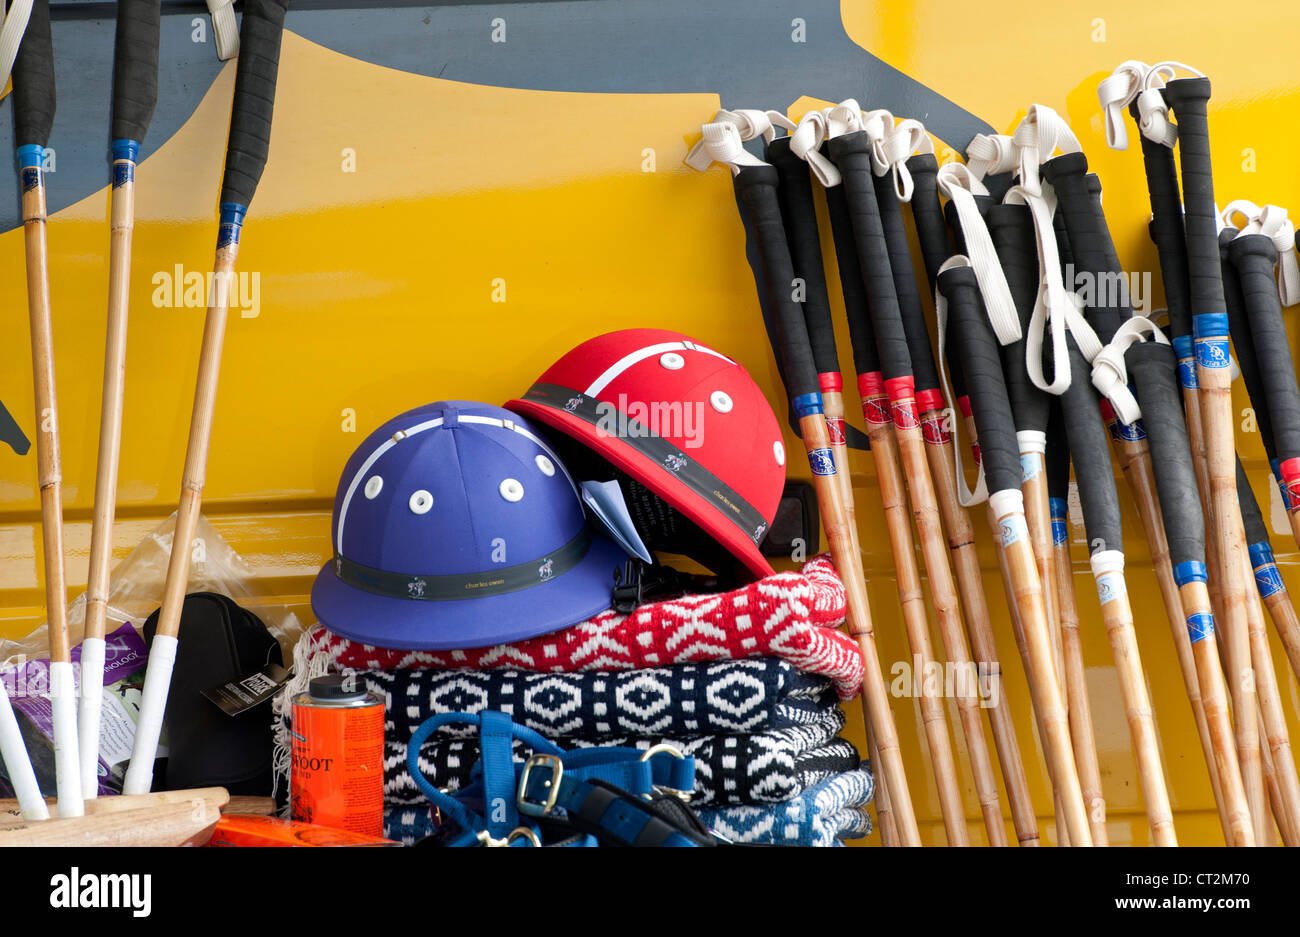 Polo equipment on sale Stock Photo - Alamy